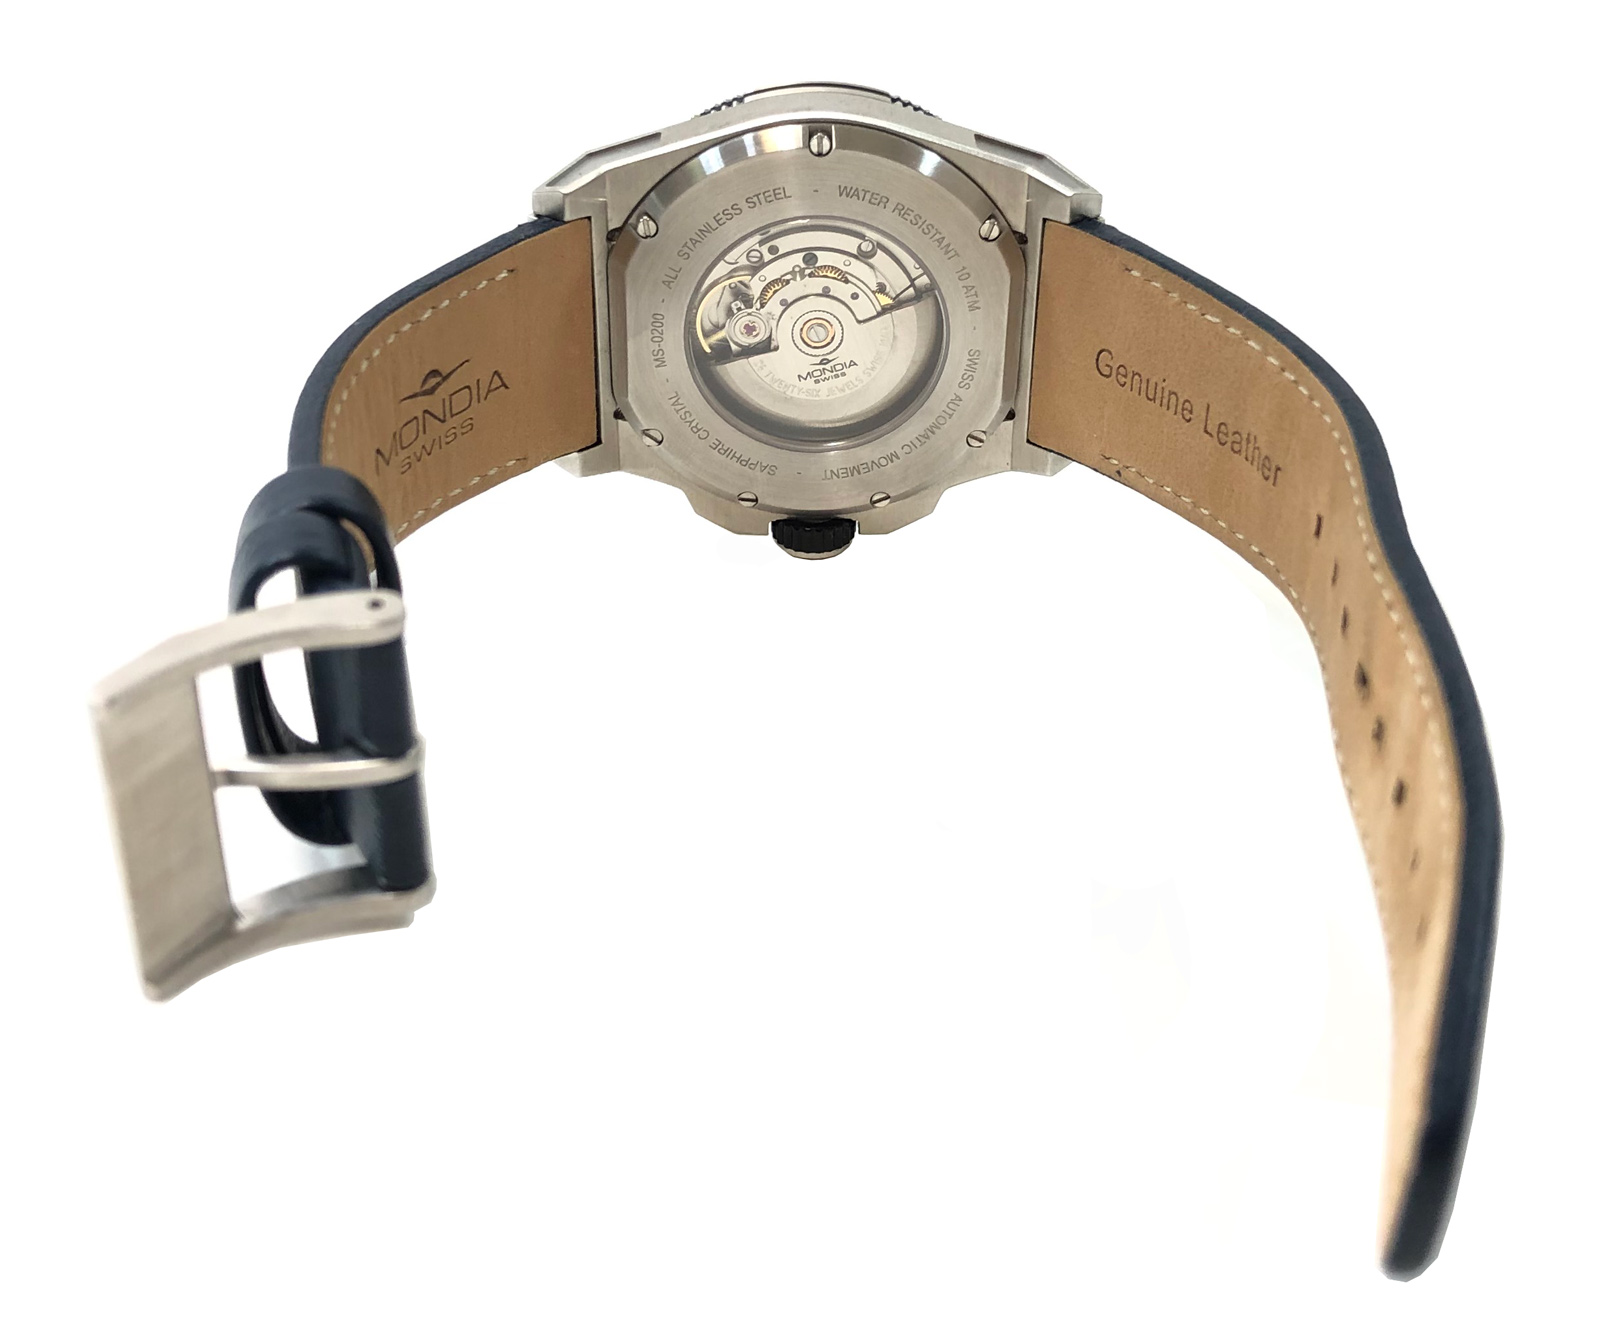 Mondia Swiss Master Automatic Men's Watch ETA-2824 10ATM Black Bezel Blue Leather Strap MS-200-SS-04BL-CP Italy